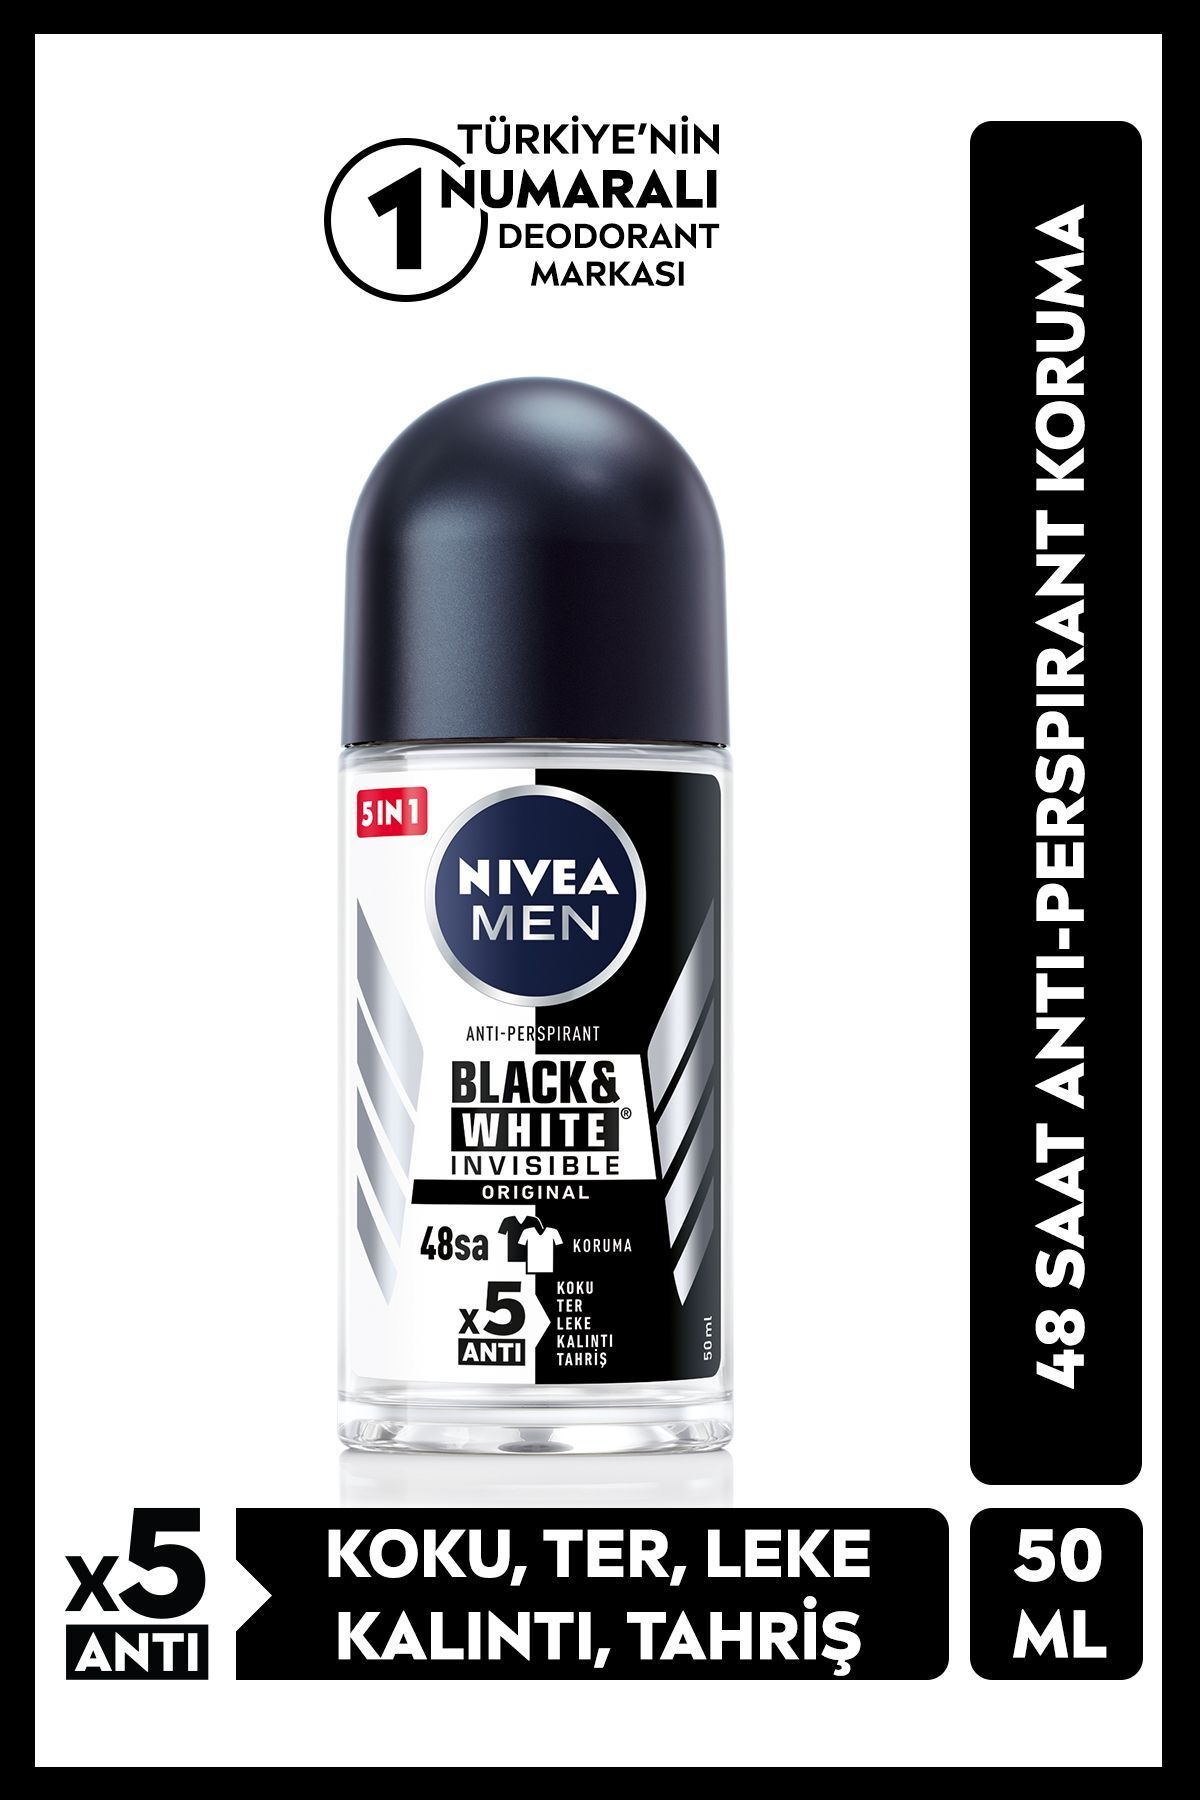 NIVEA Men Erkek Roll-on Deodorant Black&white Invisible 50ml, Ter Kokusuna Karşı 48 Saat Koruma, Ferahlık